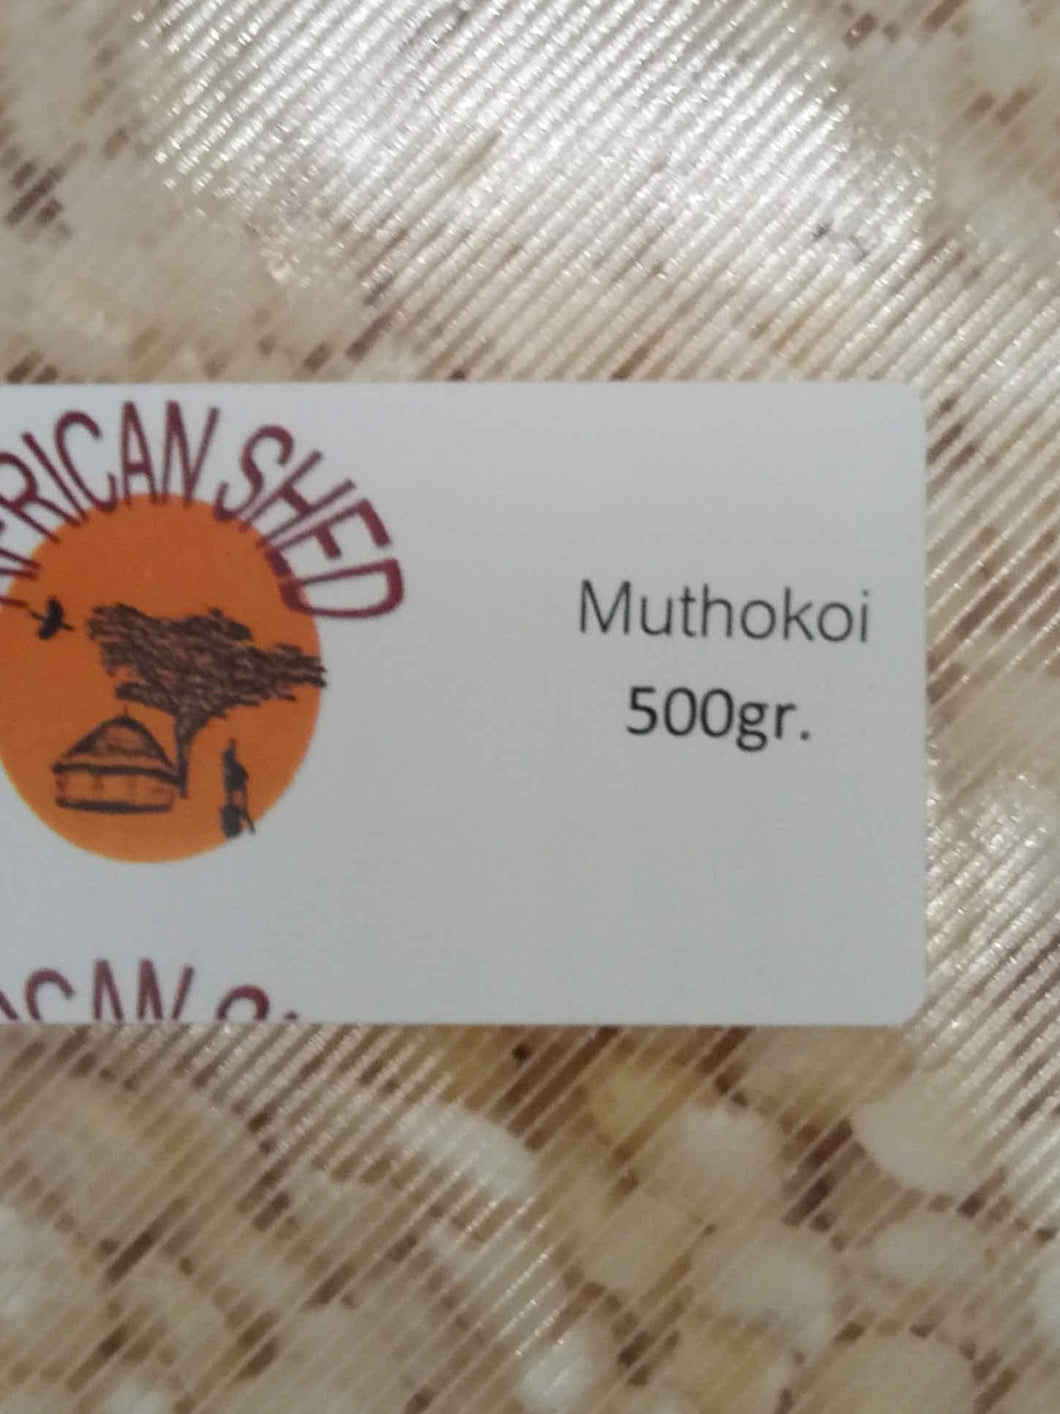 Muthokoi 500gr.